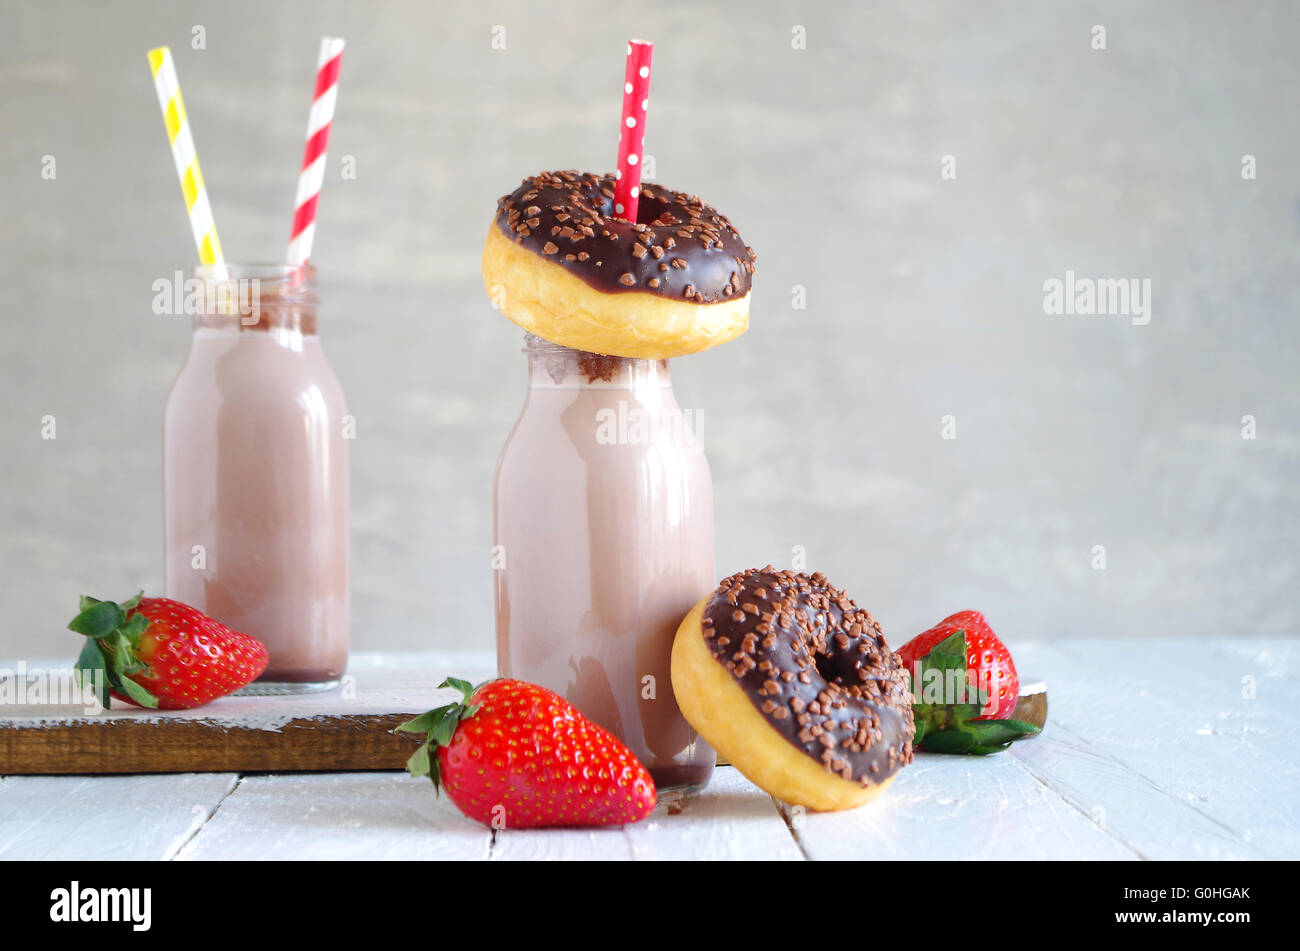 chocolate milk and chocolate donut with strawberries Stock Photo